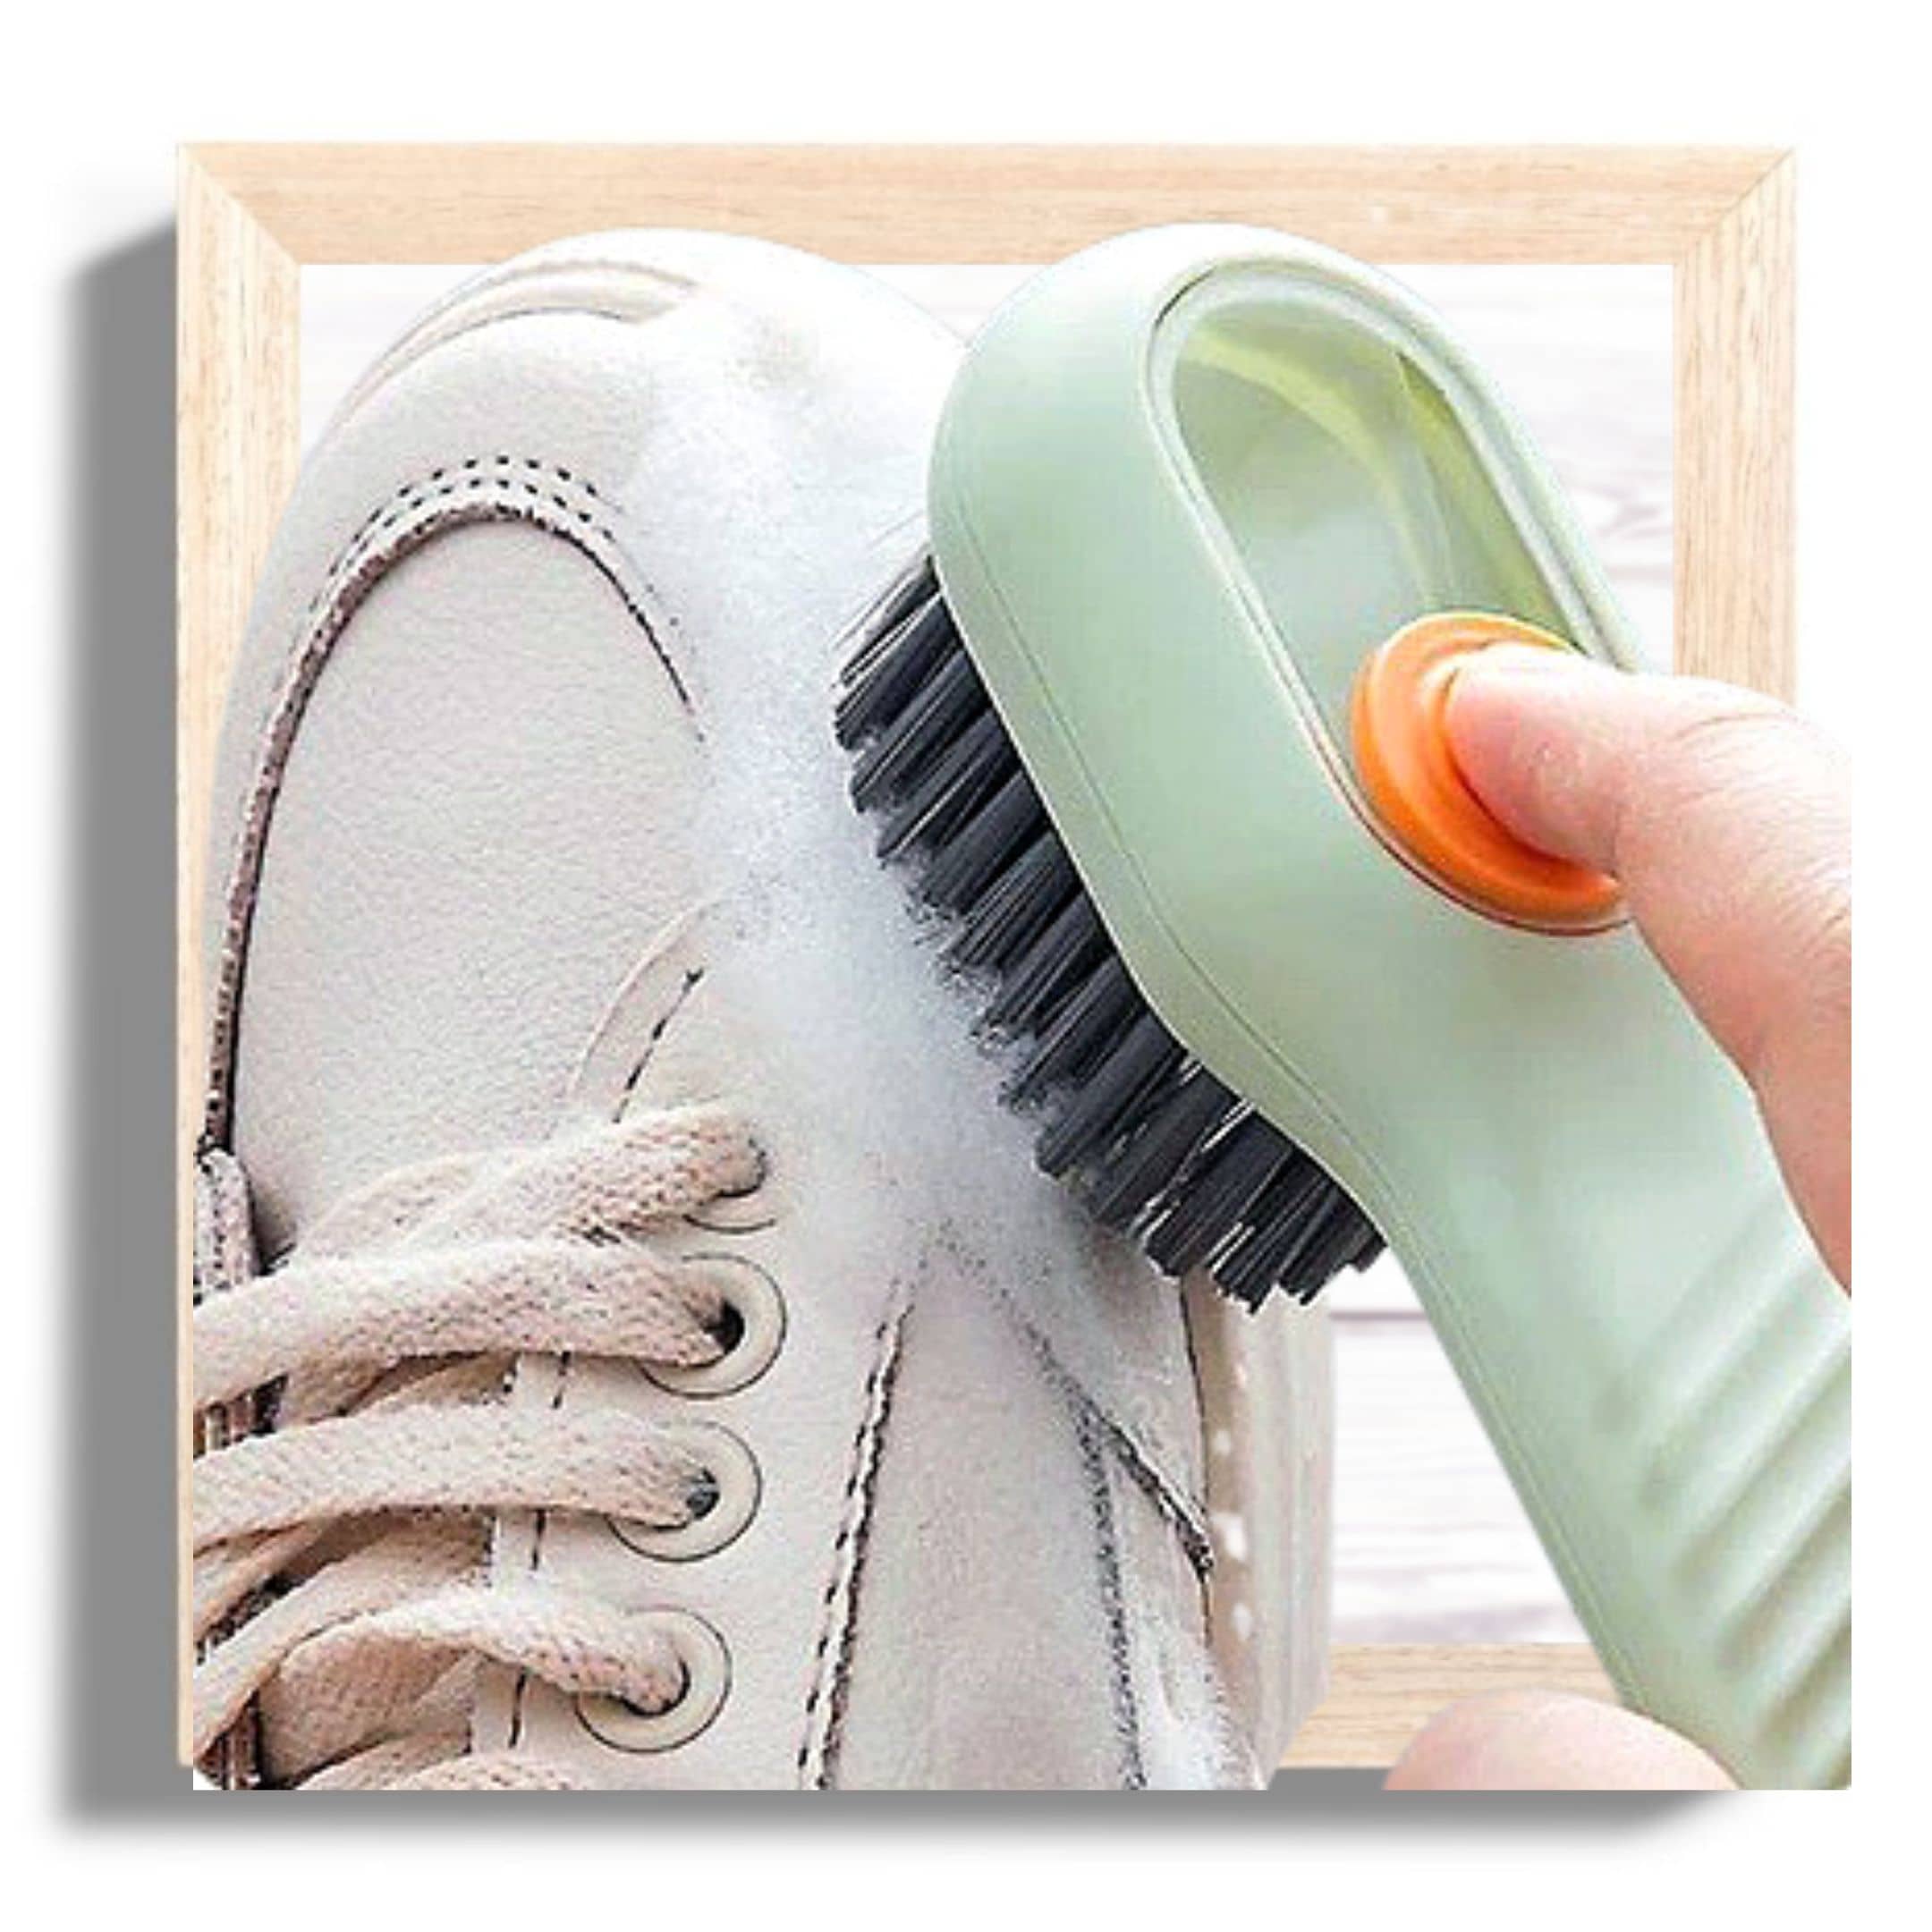 Soft Bristle Cleaning Brush